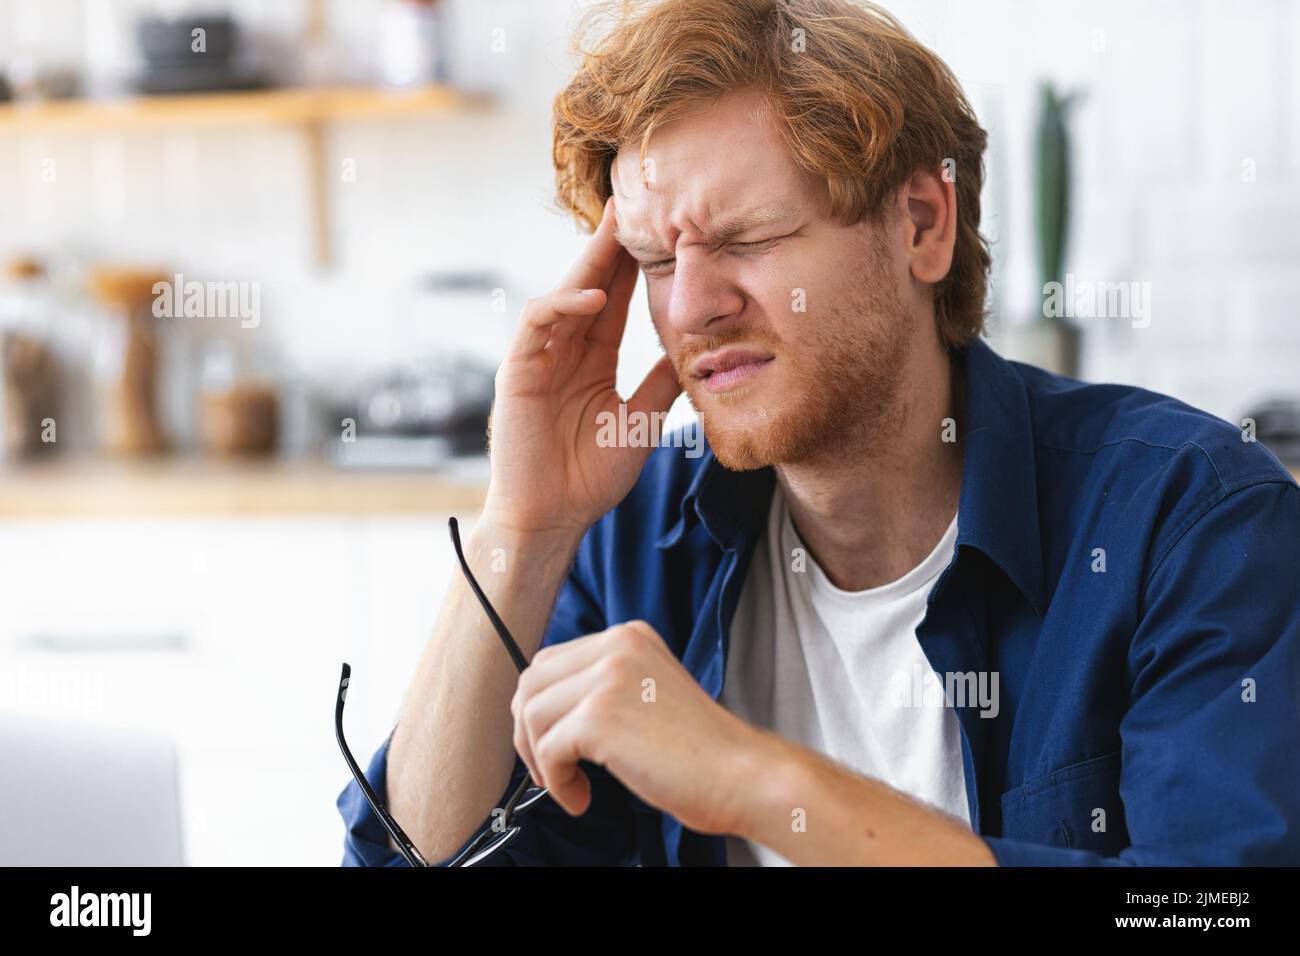 portrait of tired stressed man having headache feeling sick pain depression overwork concept Stock Photo